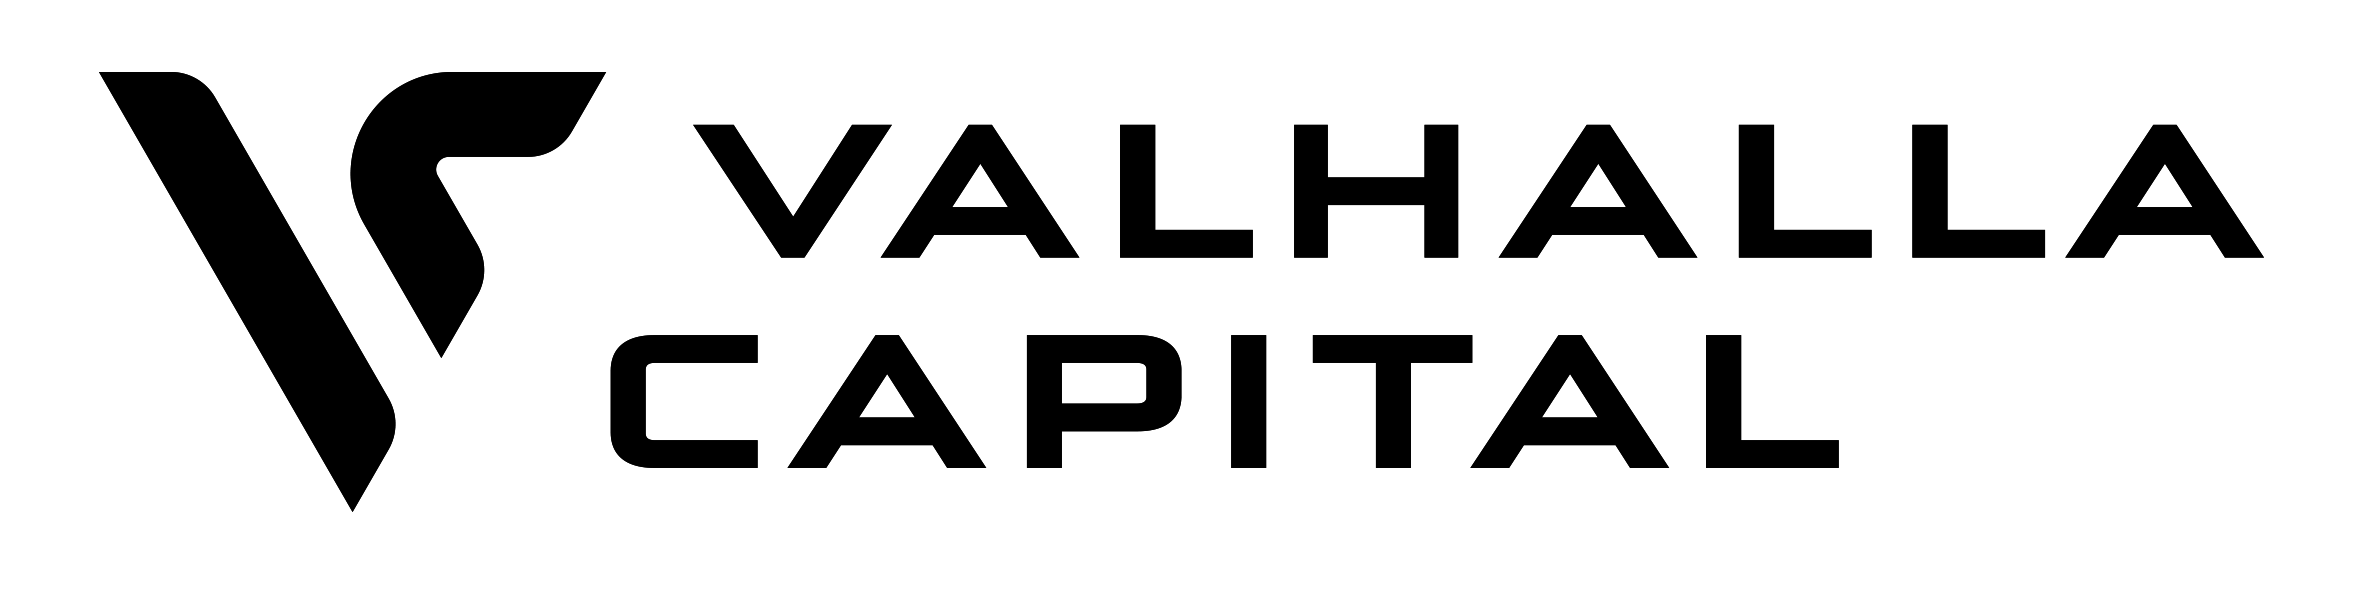 Valhalla Capital